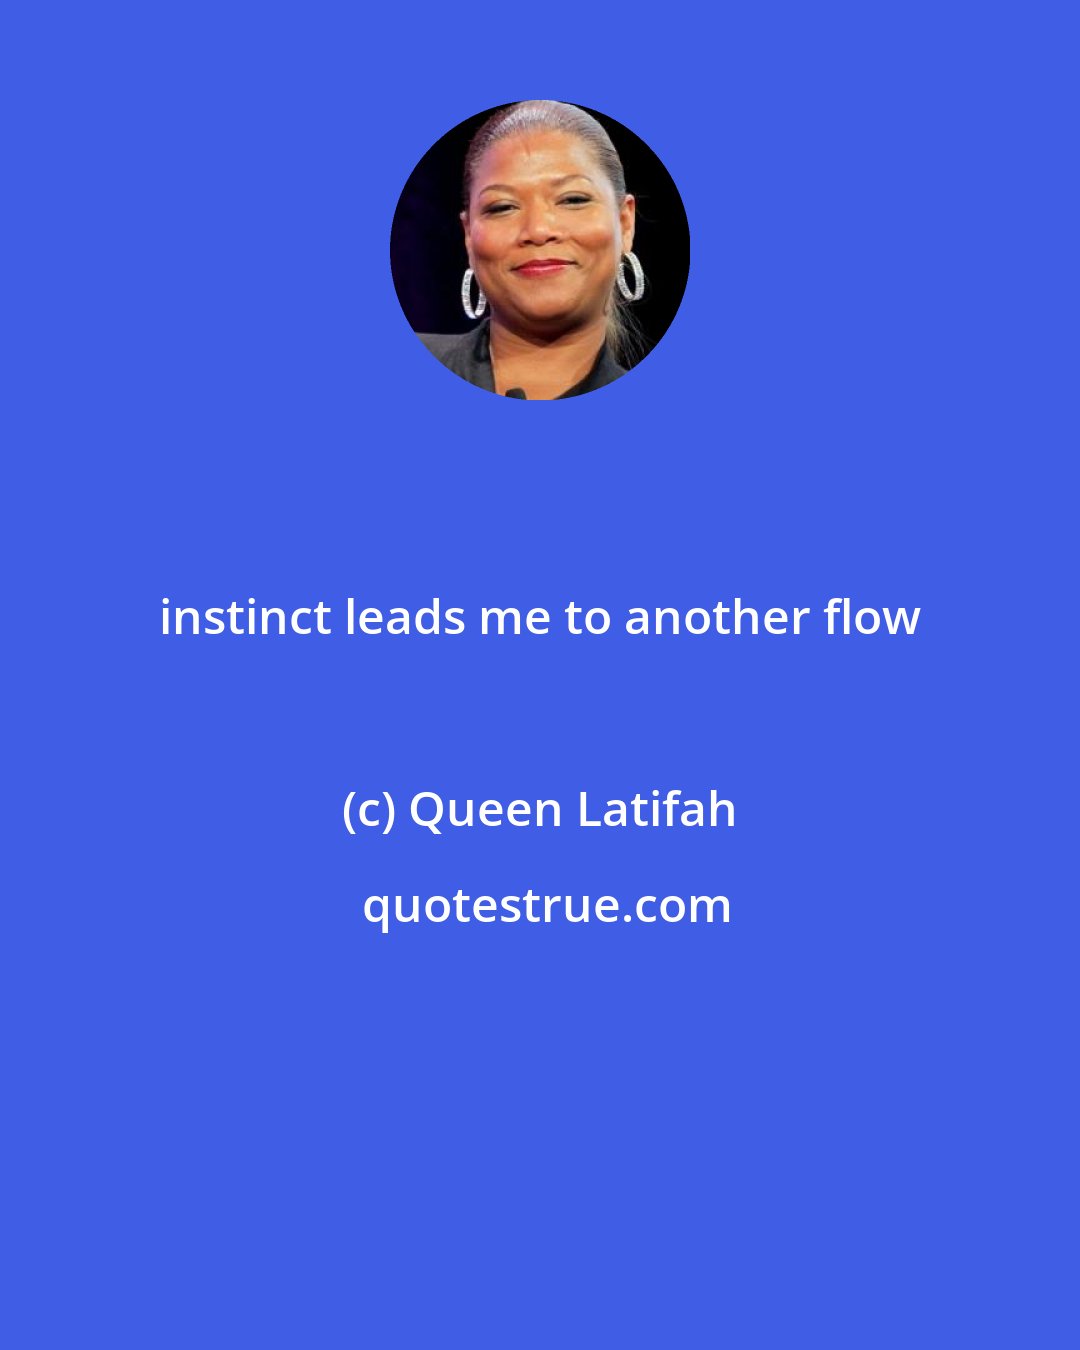 Queen Latifah: instinct leads me to another flow